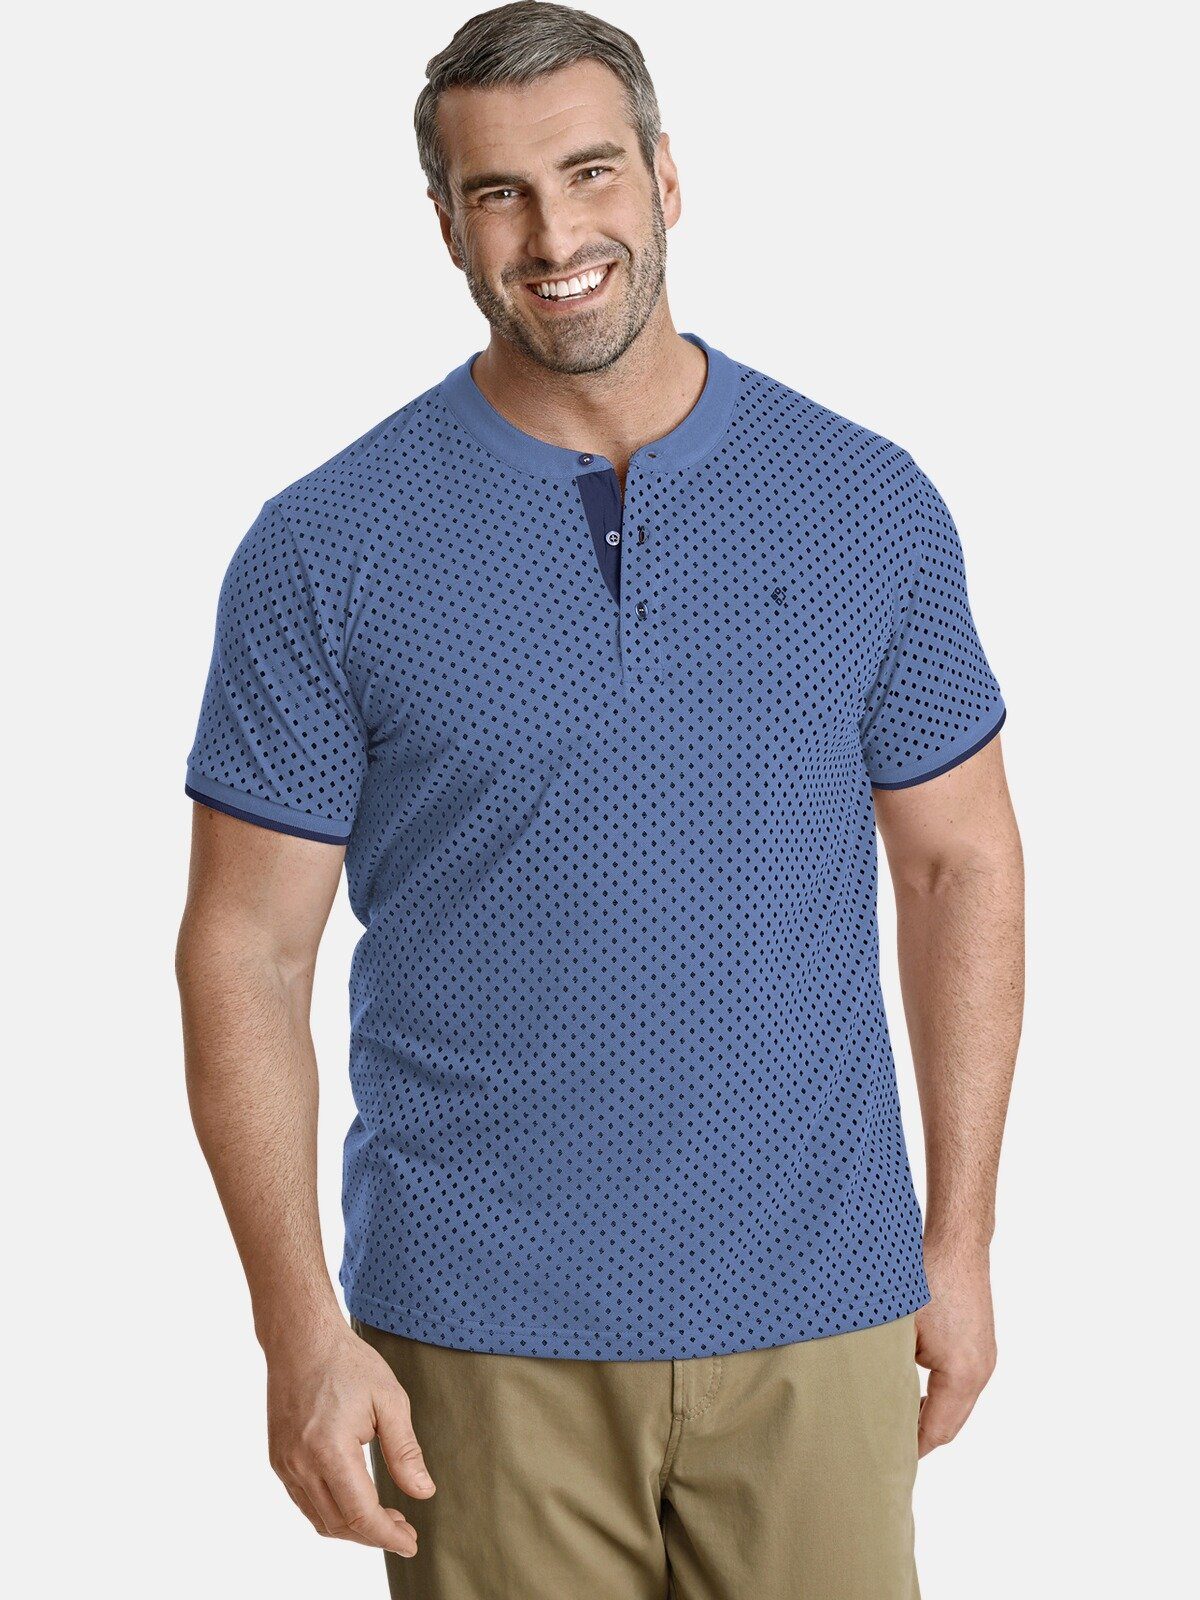 Charles Colby T-Shirt DUKE COLIN in minimal Rautendesign hellblau